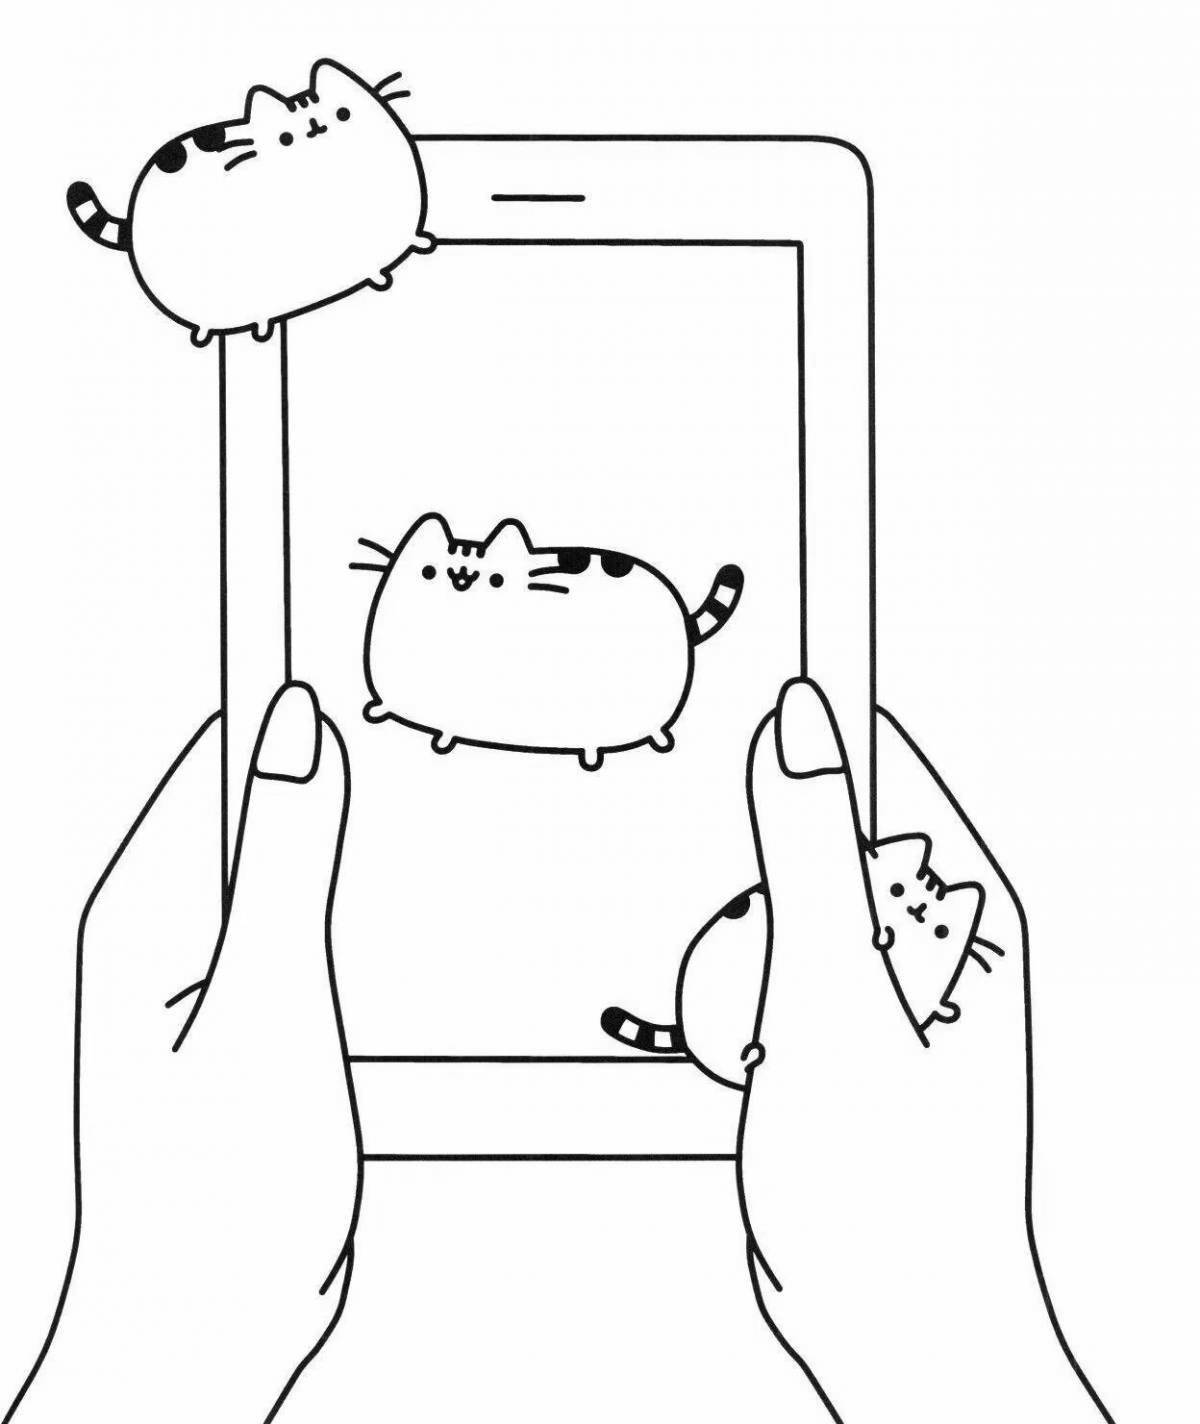 Rampant pop cat coloring page